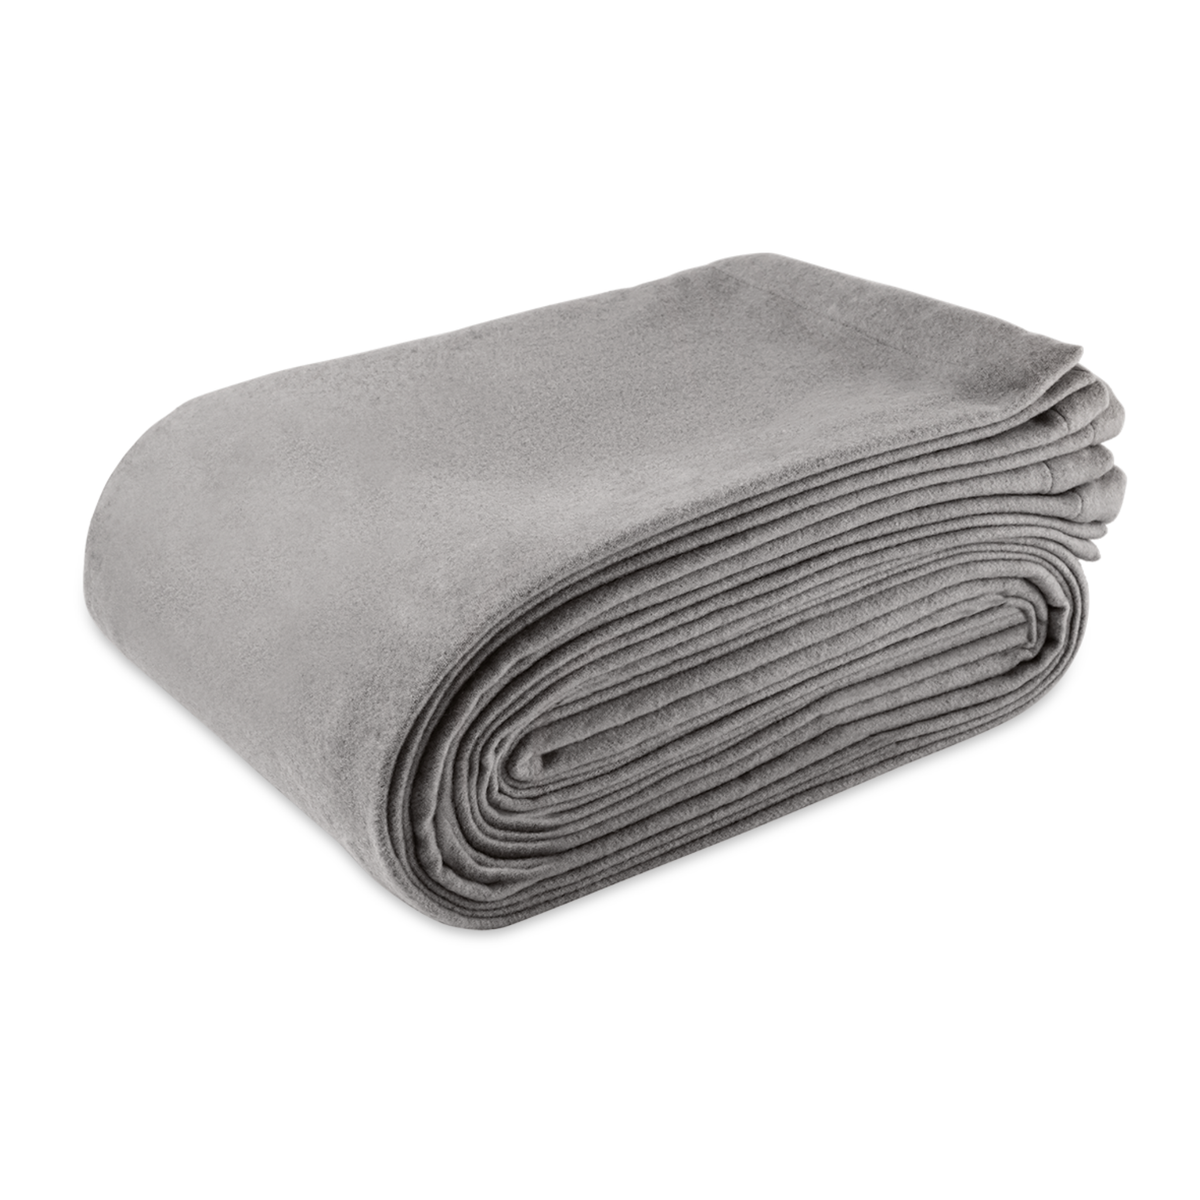 Folded Blanket of Matouk Venus Bedding in Pearl Grey Color